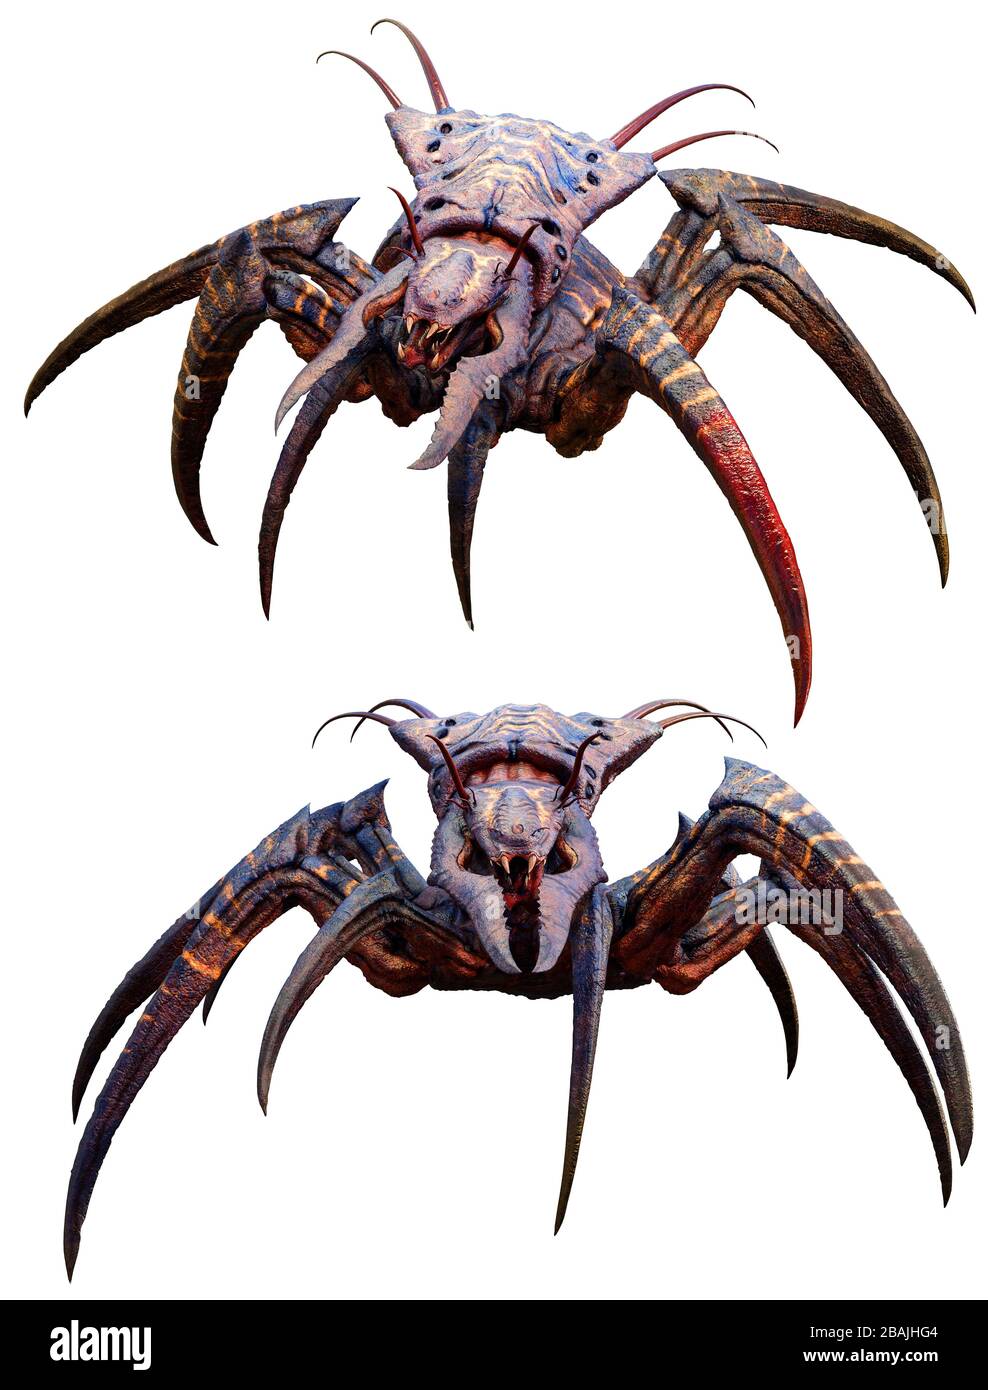 Arachnid horror creature 3D illustration Stock Photo